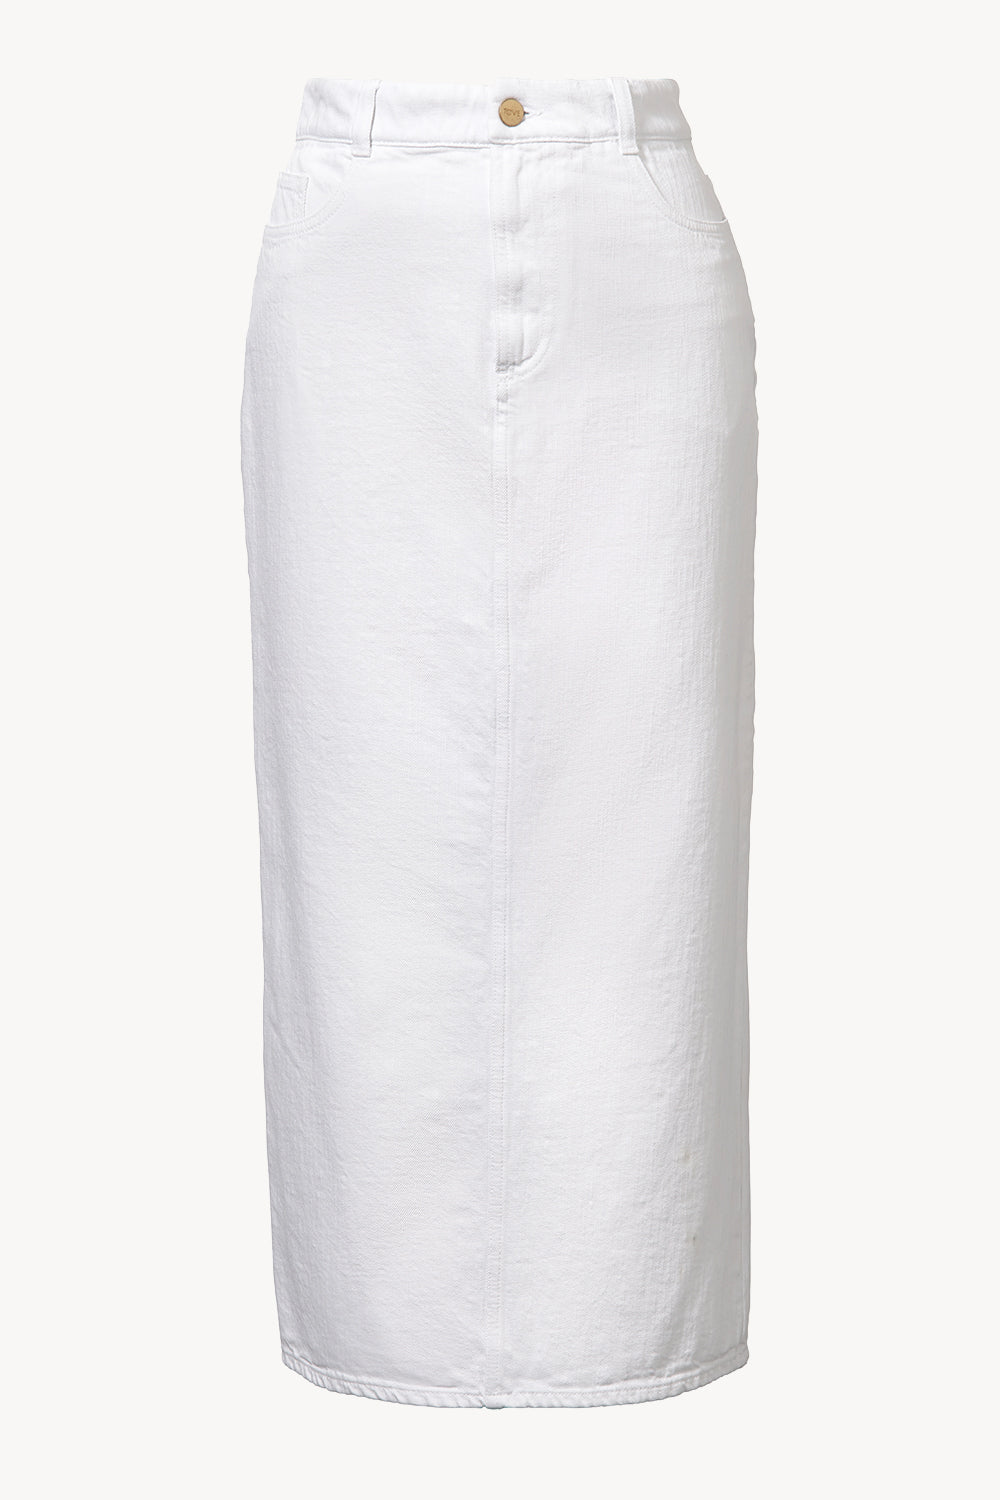 Petra White Denim Skirt (Skirt Society Exclusive)